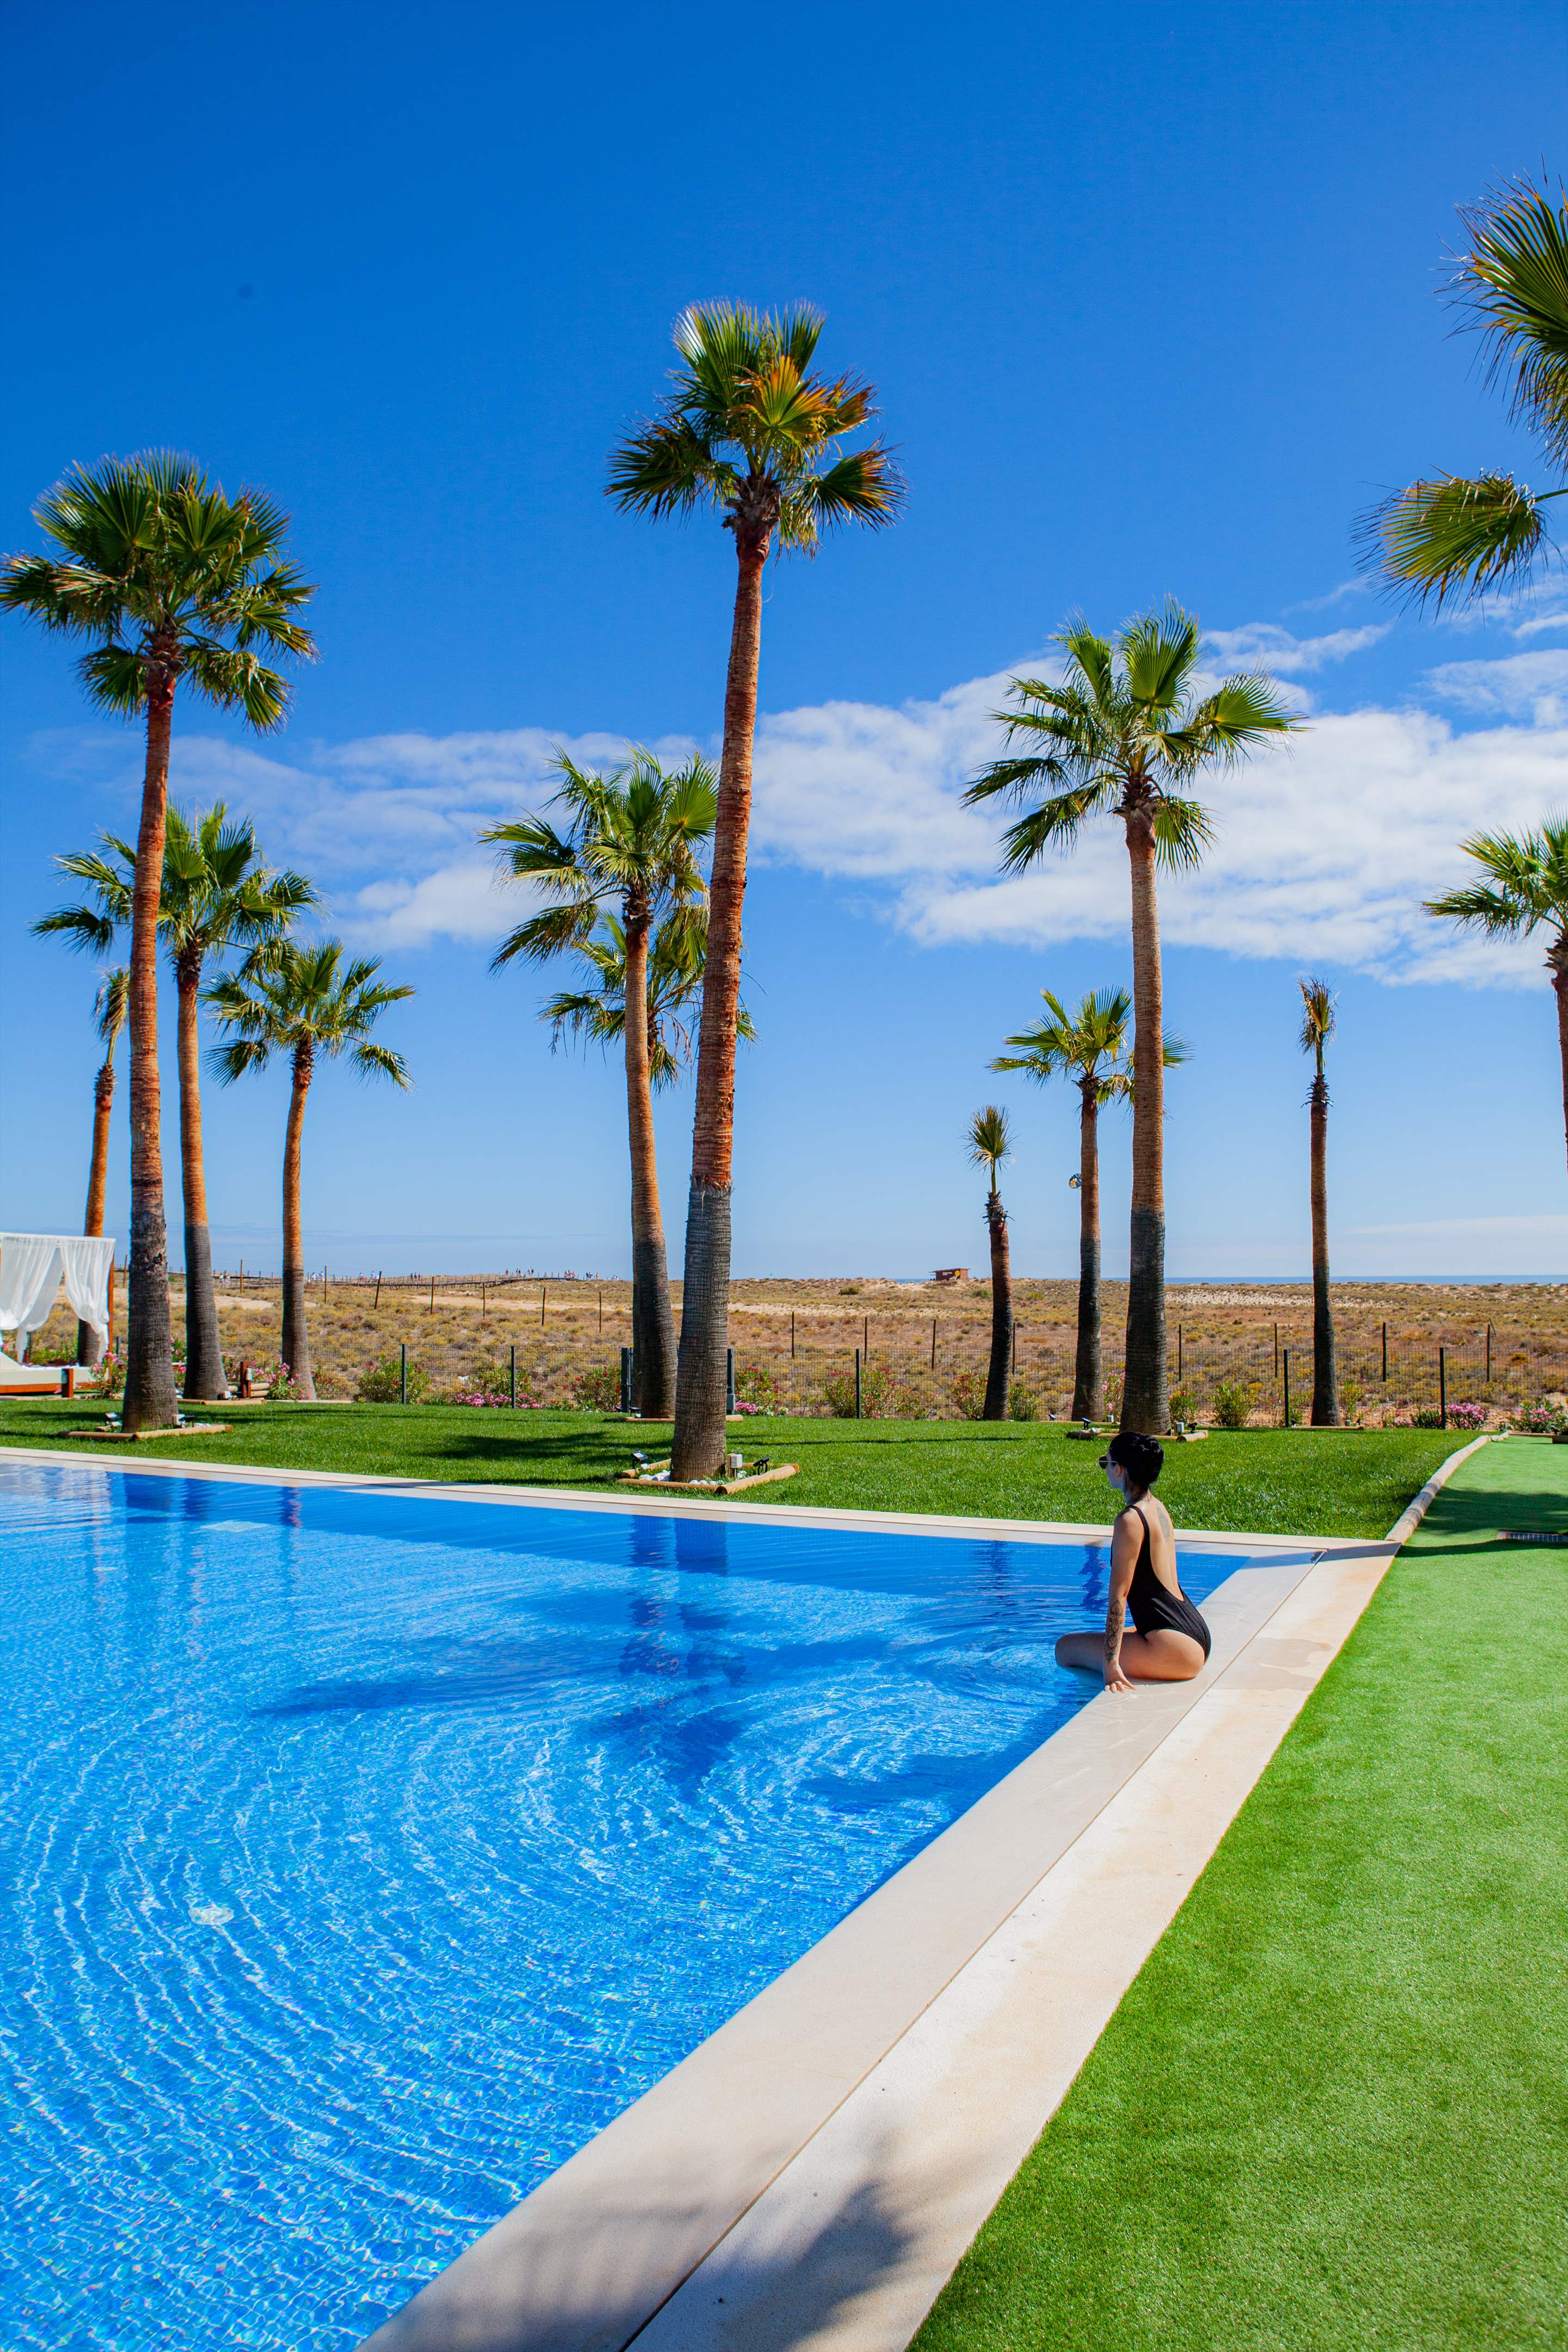 Vidamar Hotel Superior Ocean View Room, HB, Family Room, 1 bedroom hotel in Vidamar Resort, Algarve Photo #51